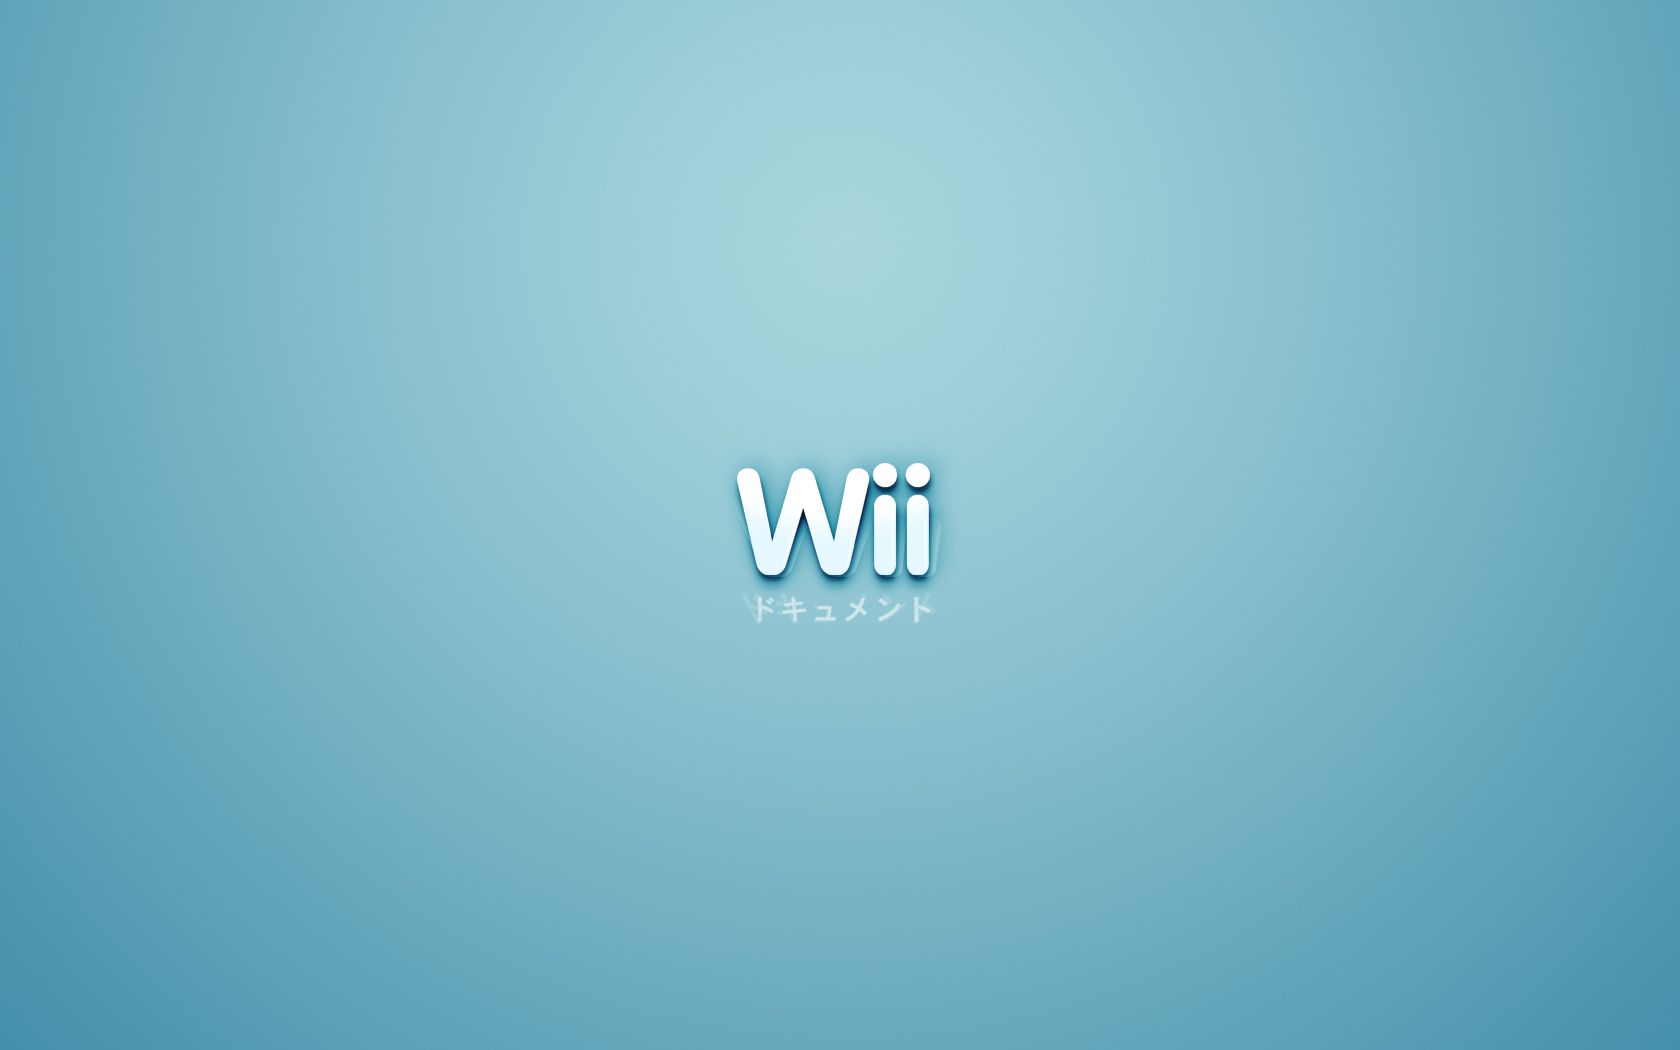 Wii wallpaper